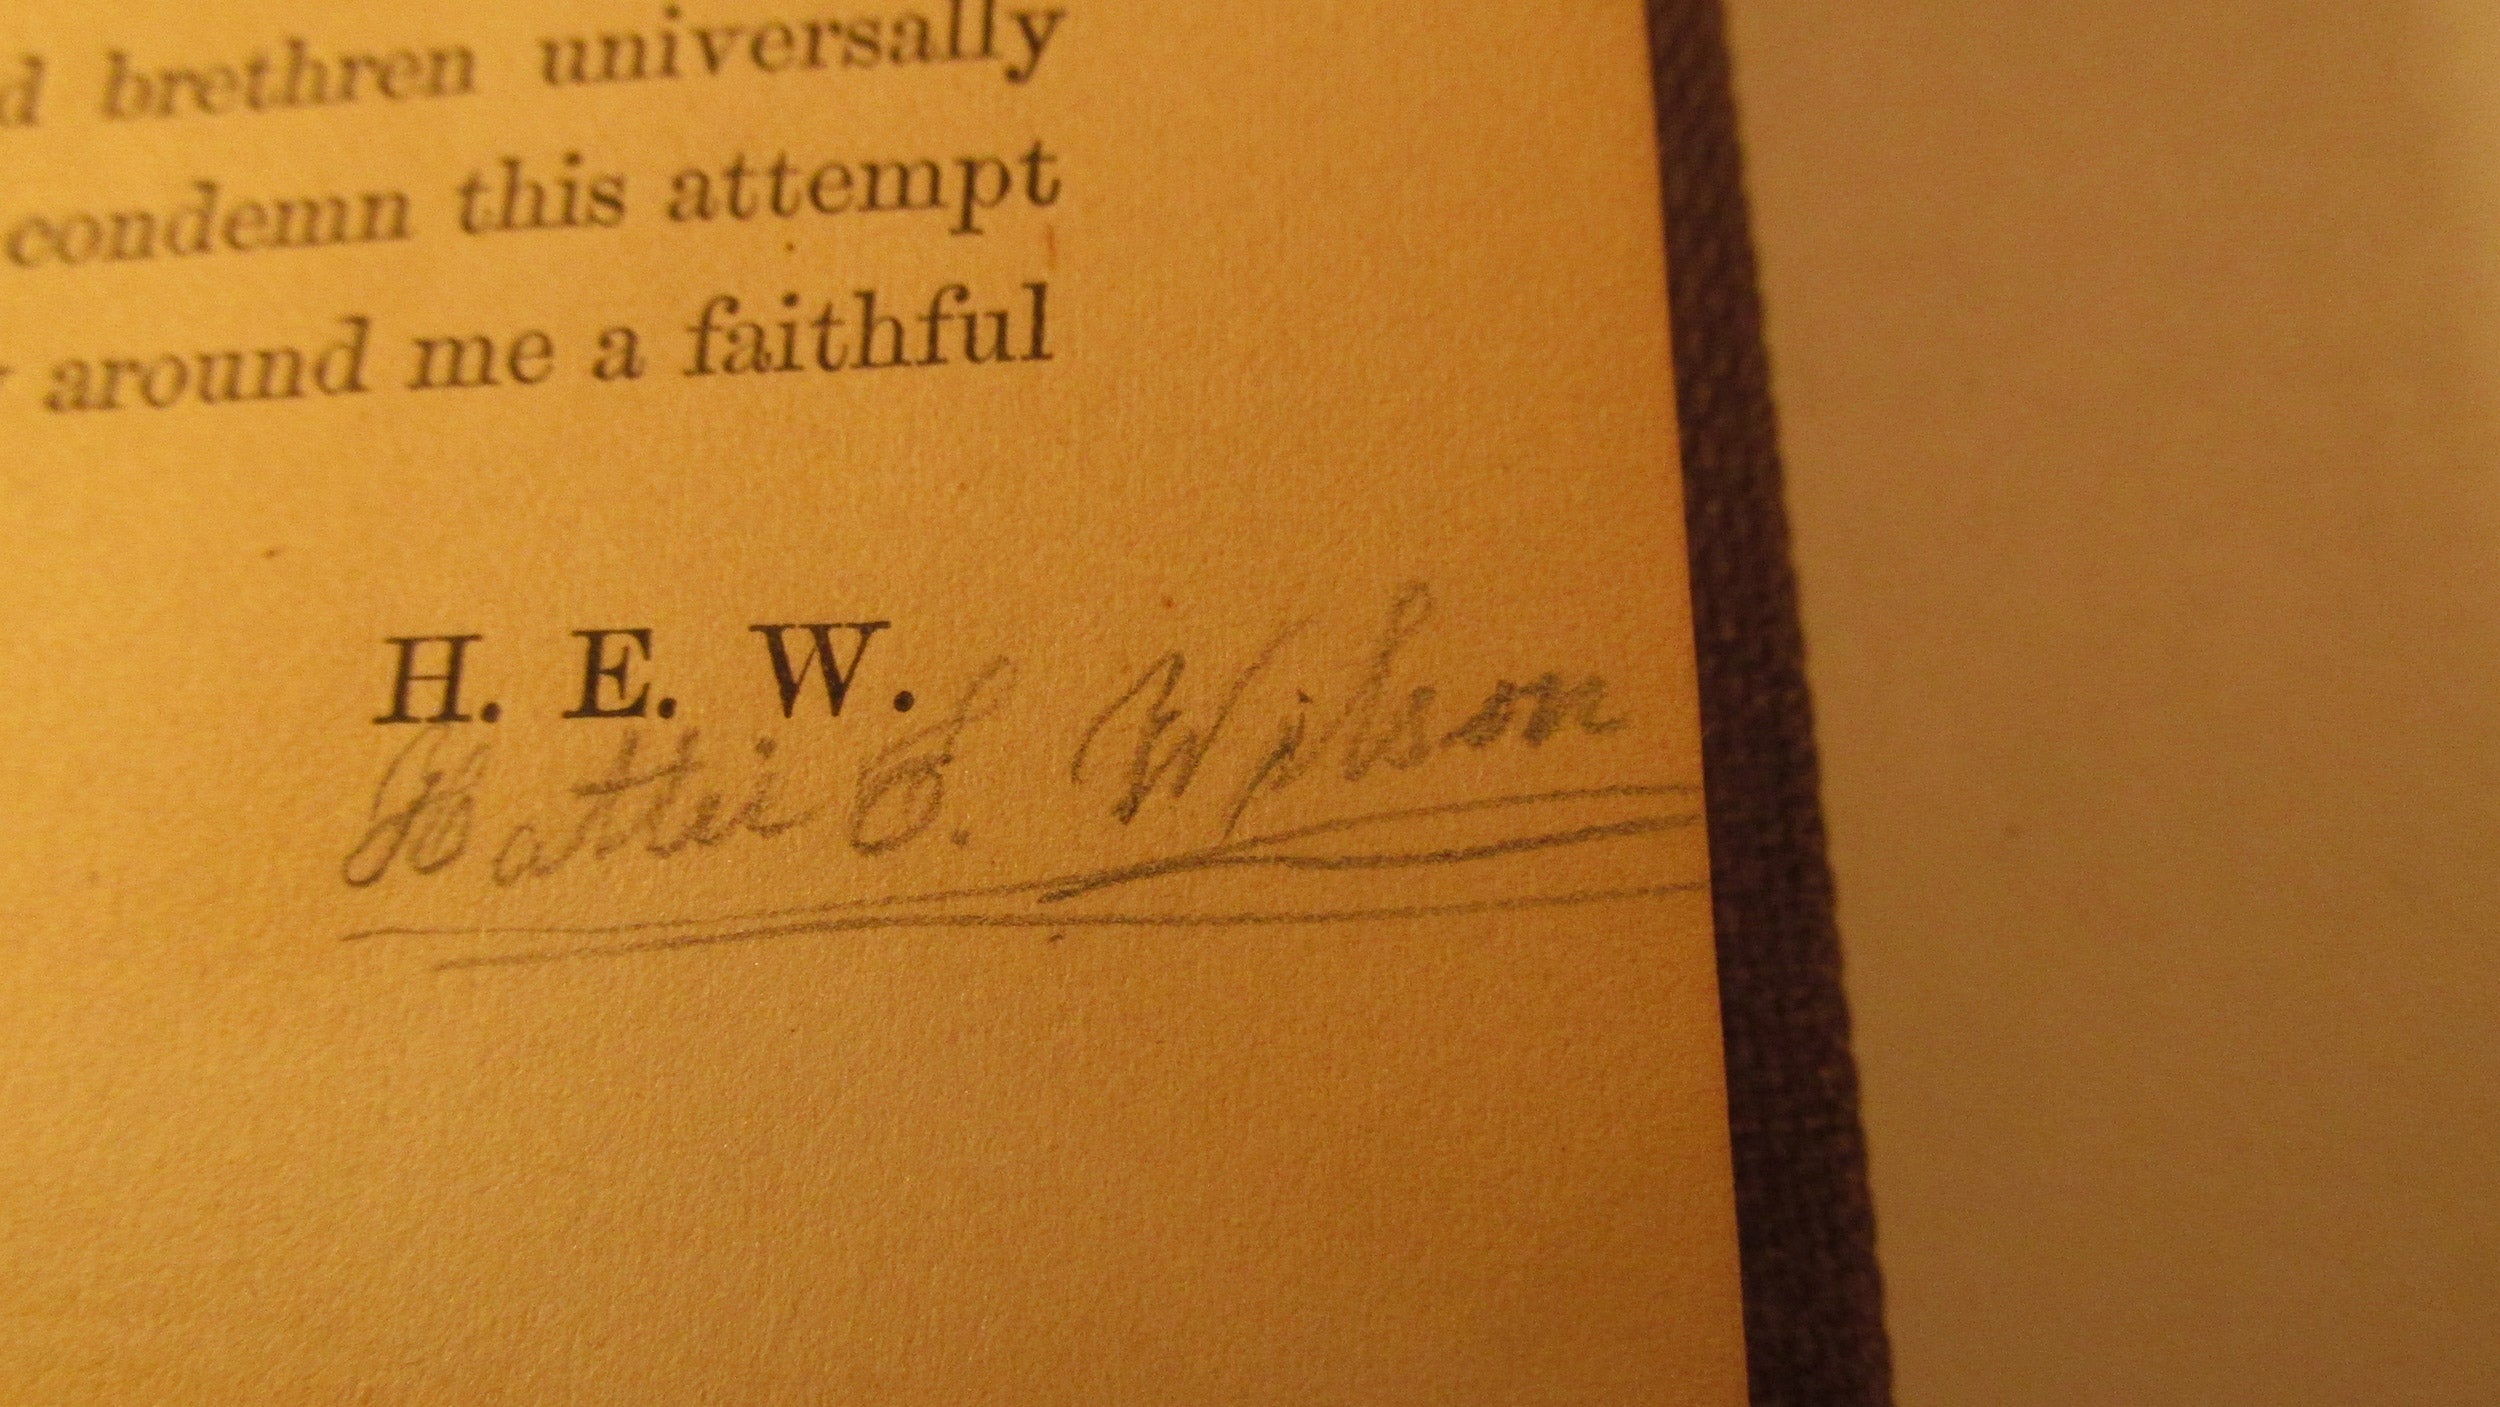 Signature on book